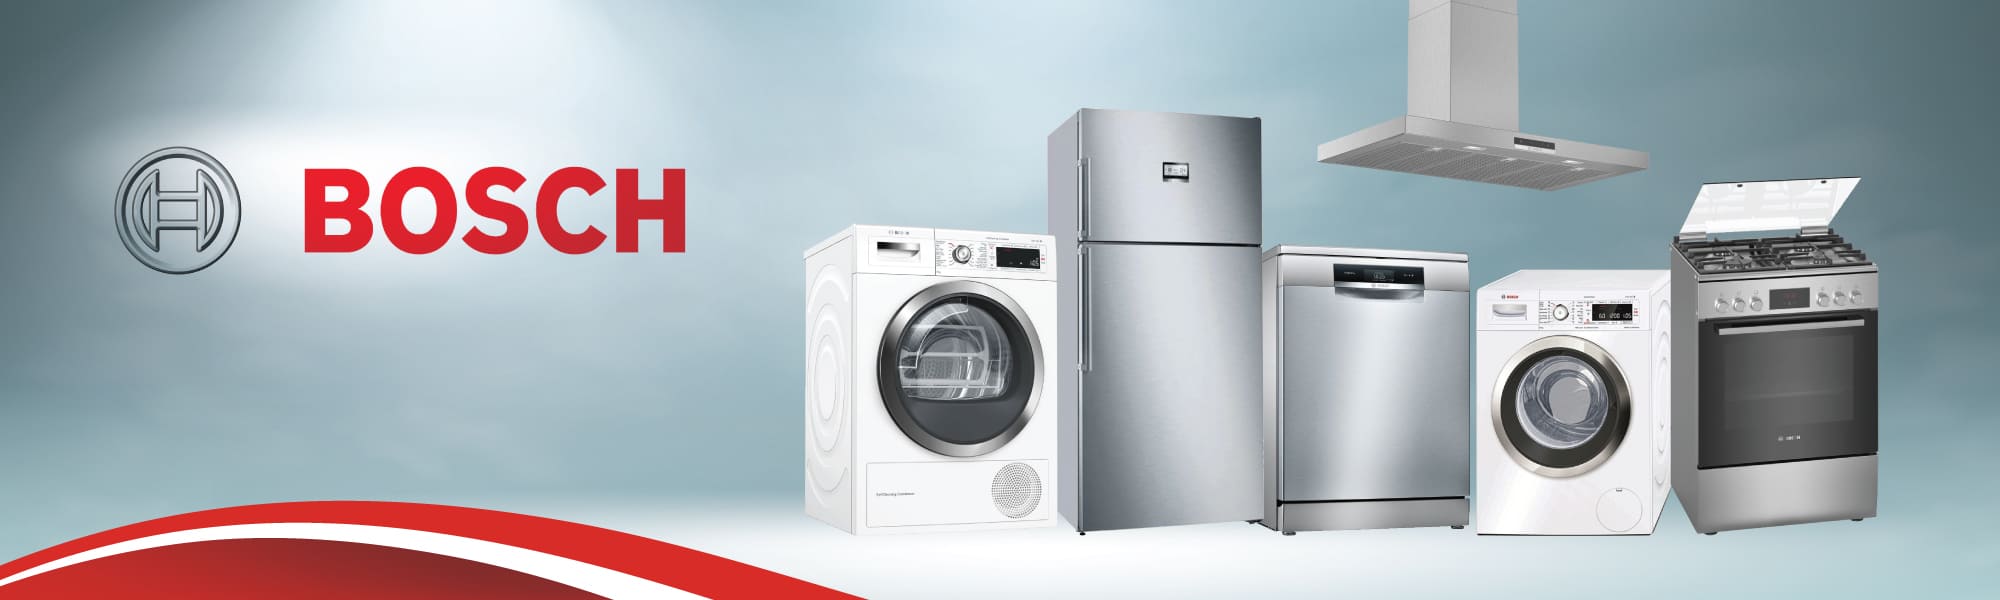 Bosch-Washing-Machine-Customer-Care-Gurgaon